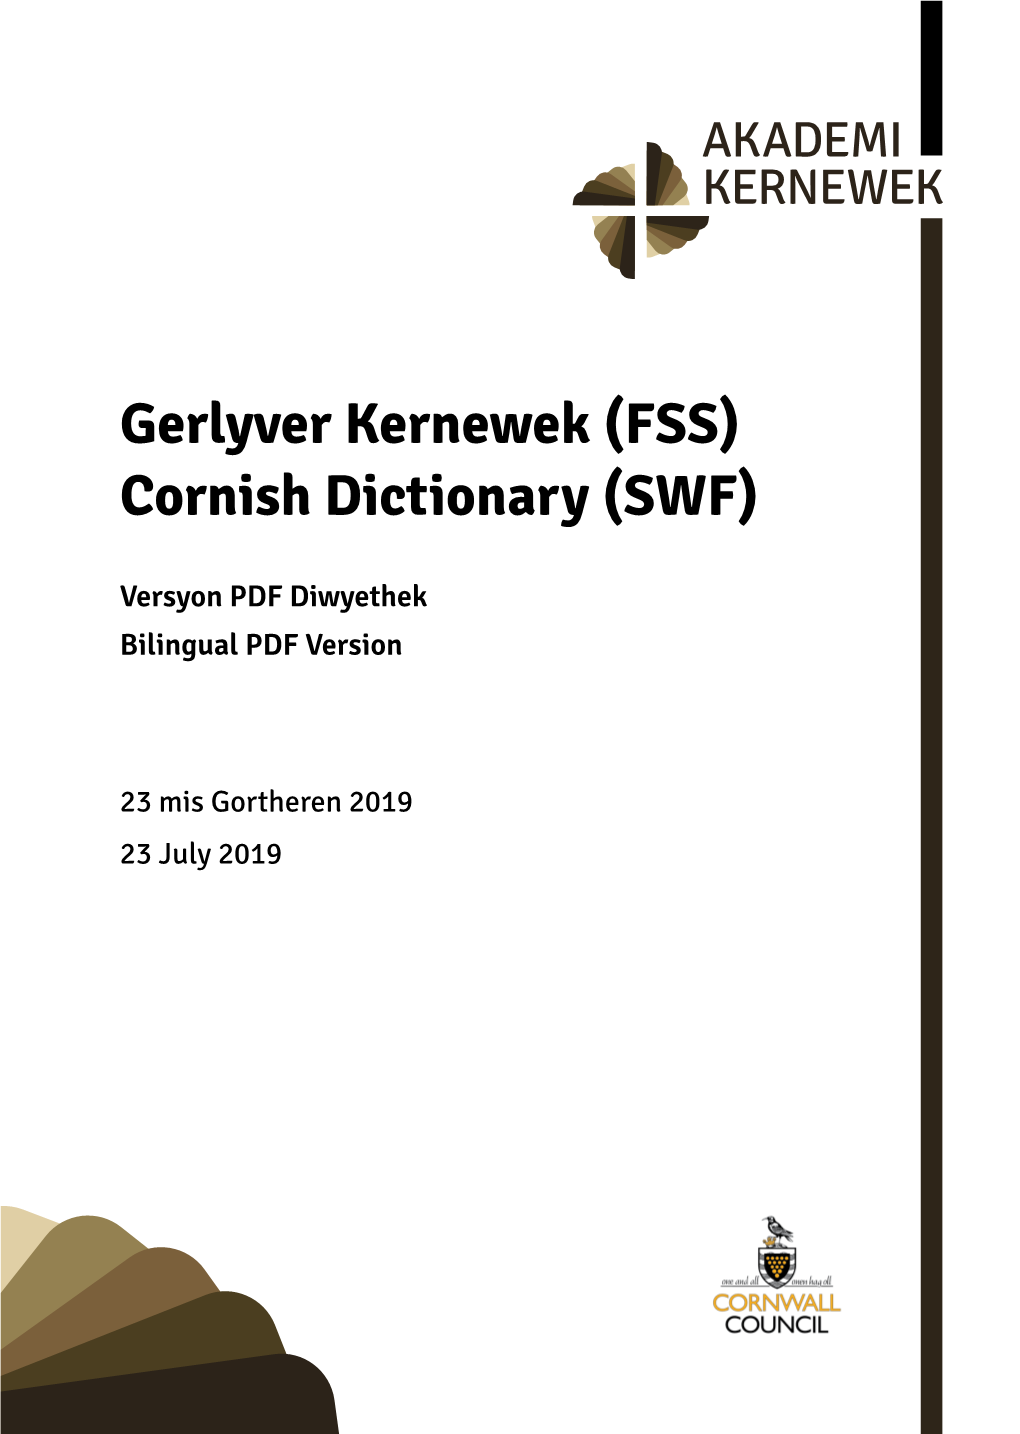 Gerlyver Kernewek (FSS) Cornish Dictionary (SWF)